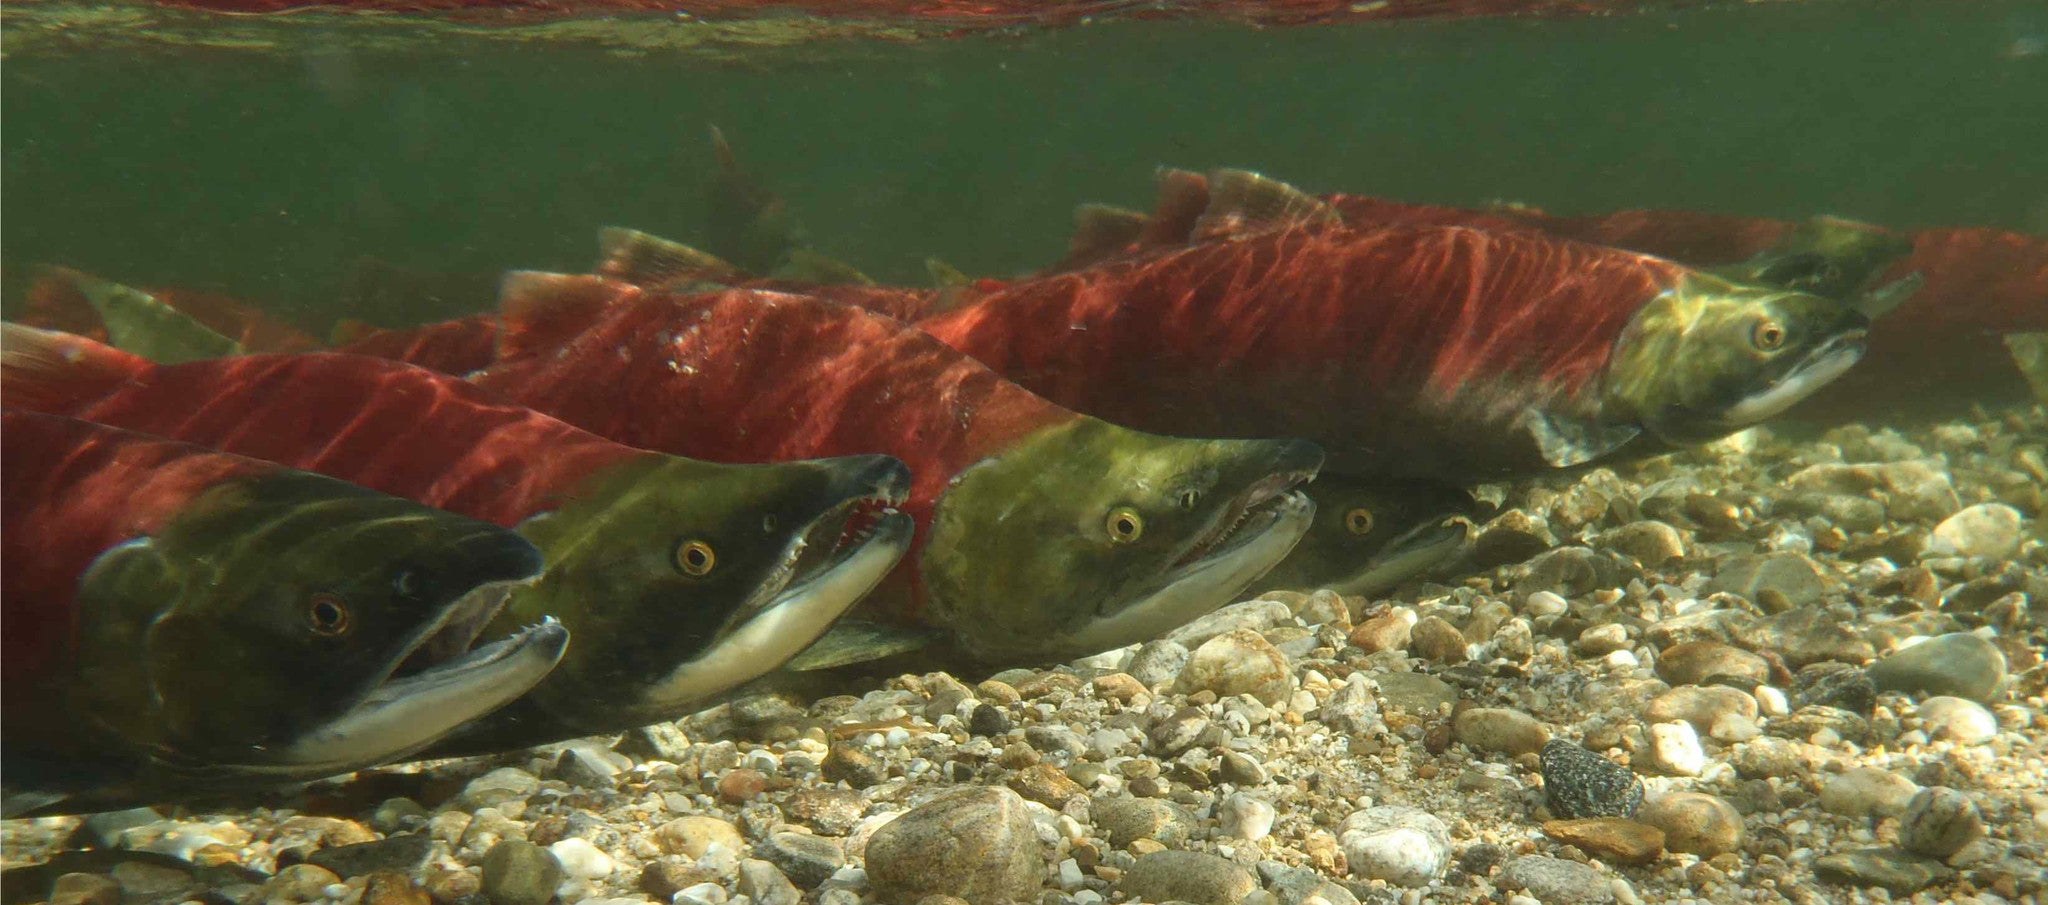 Sockeye Salmon from documentary "Salmon Confidential"